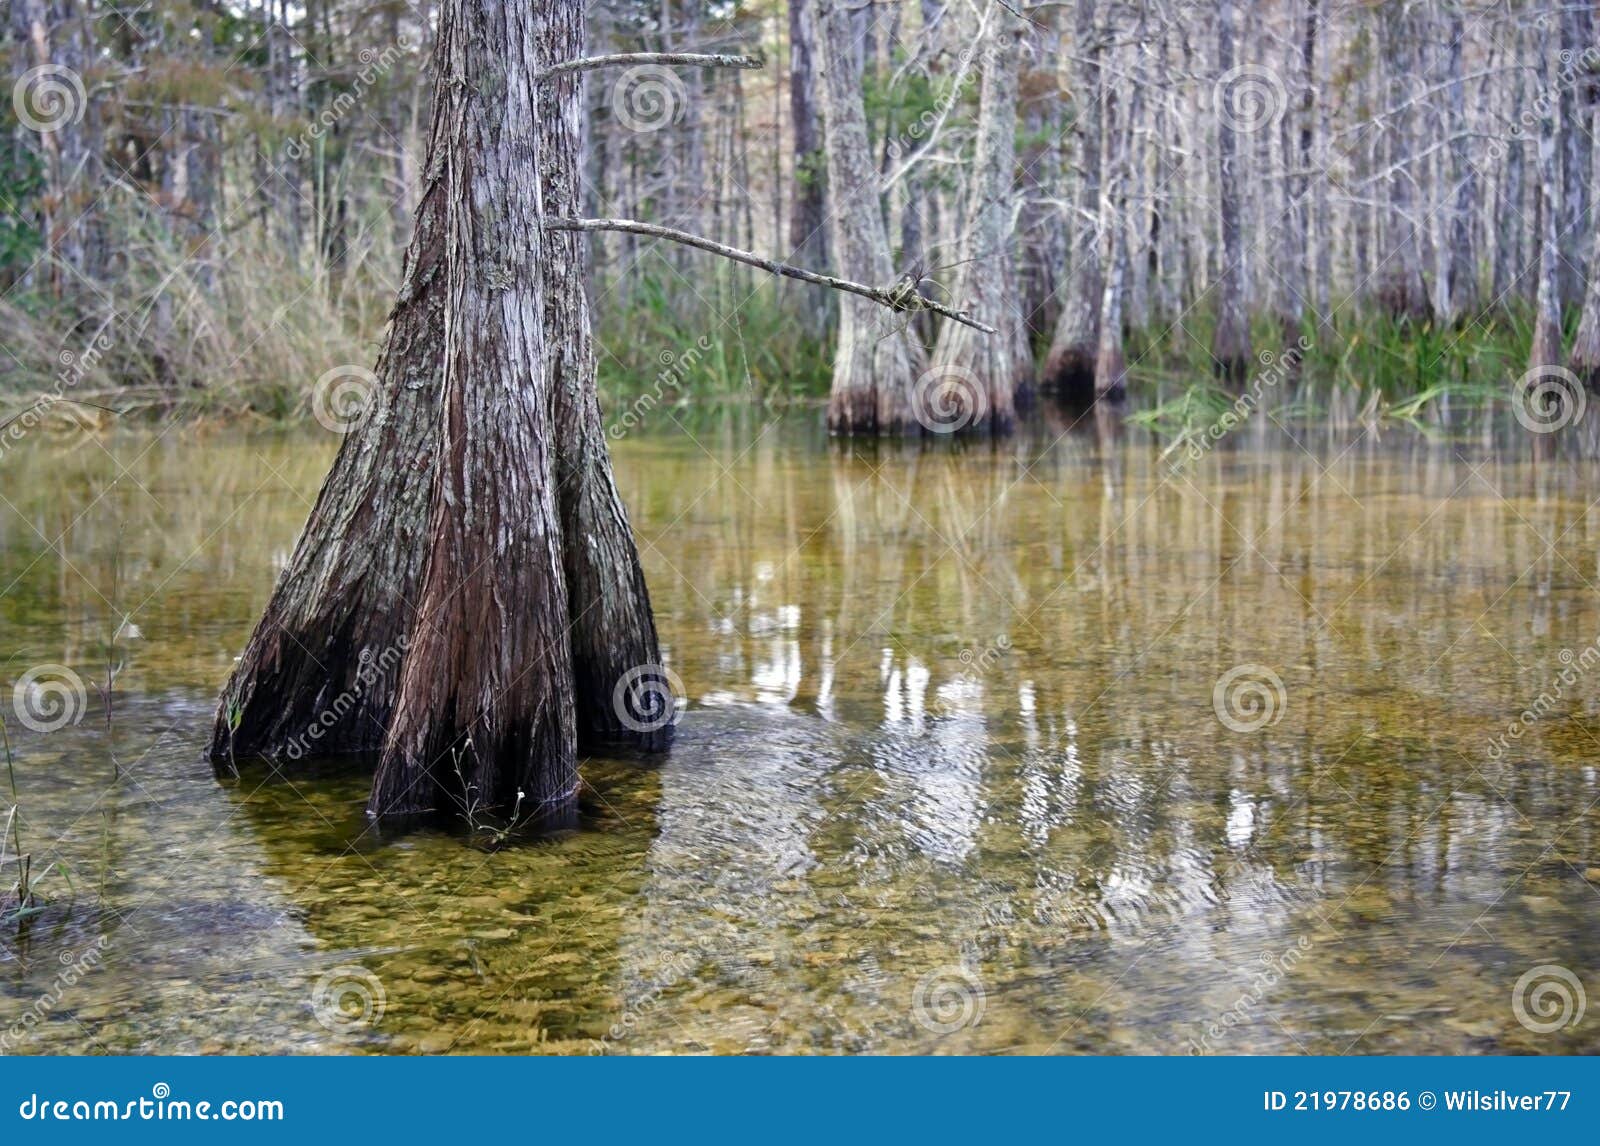 big cypress national preserve